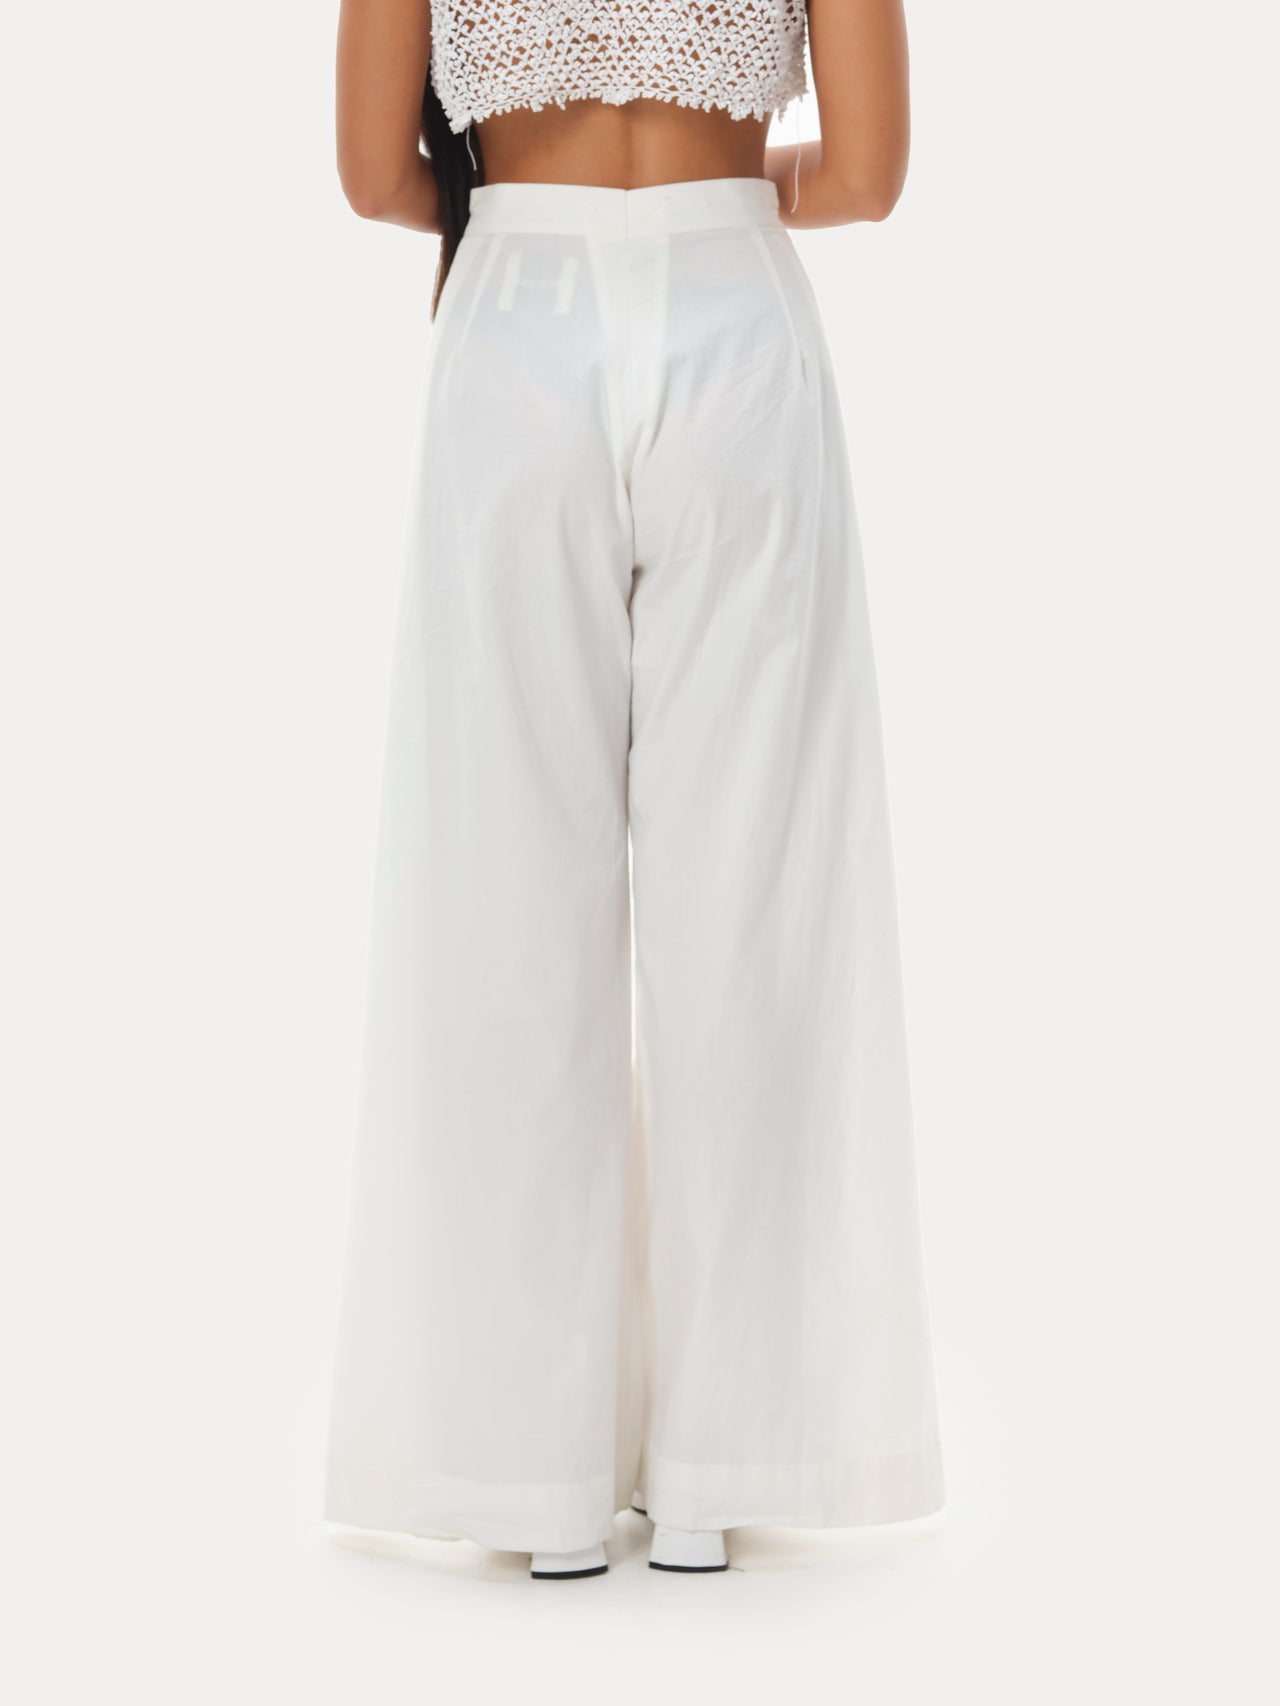 Box pleated pants - White